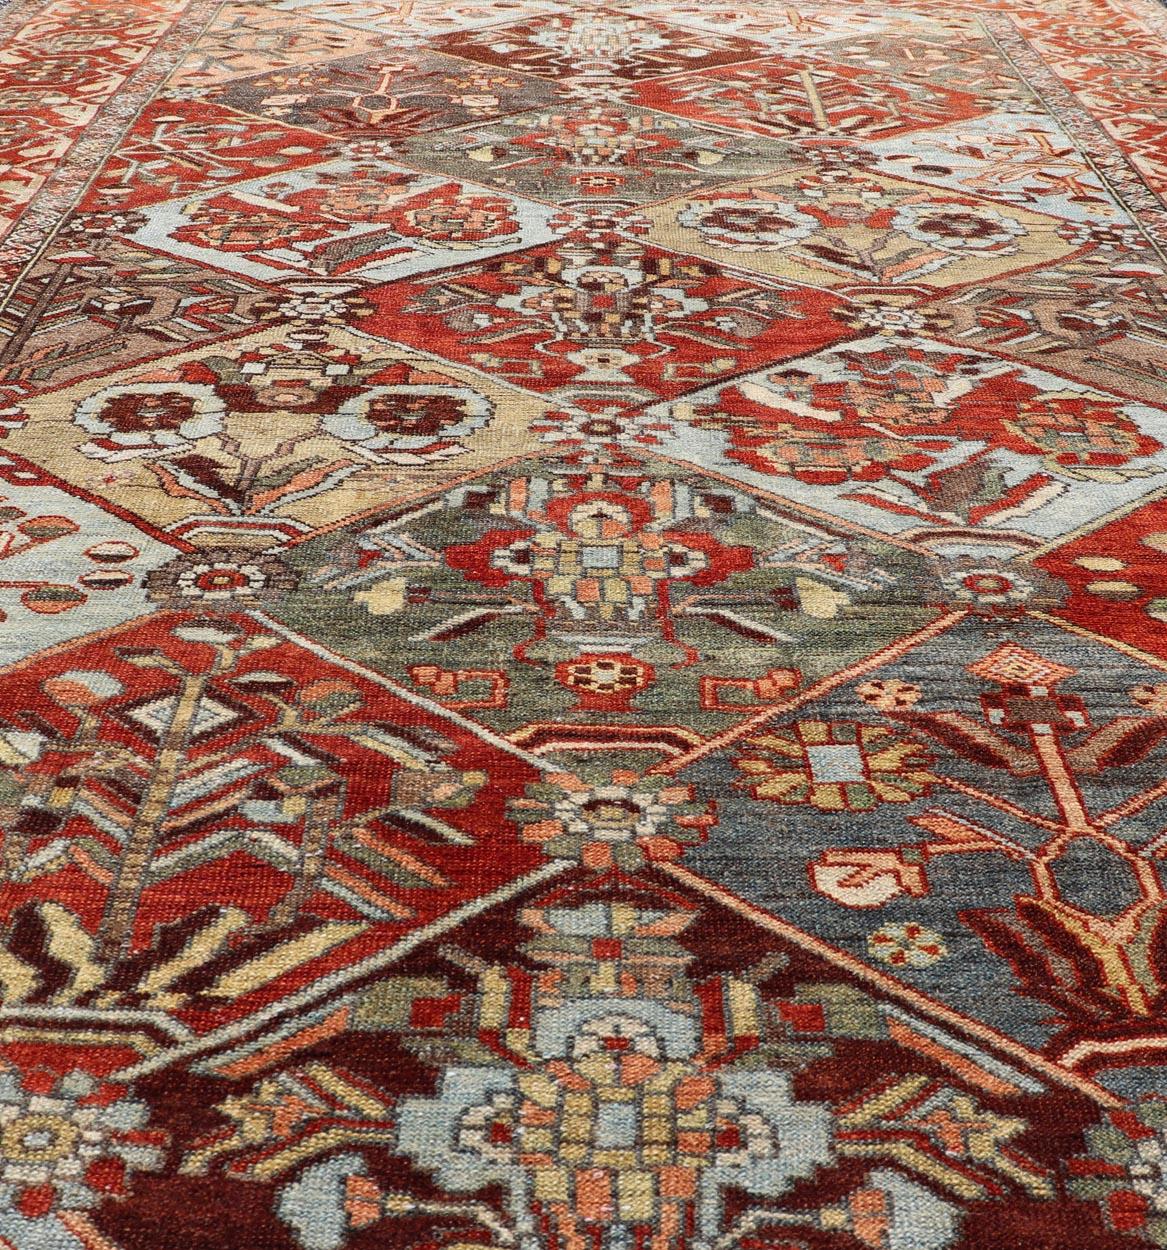 Antique Persian Bakhitari Colorful Rug in All-Over Diamond Garden Design  For Sale 1